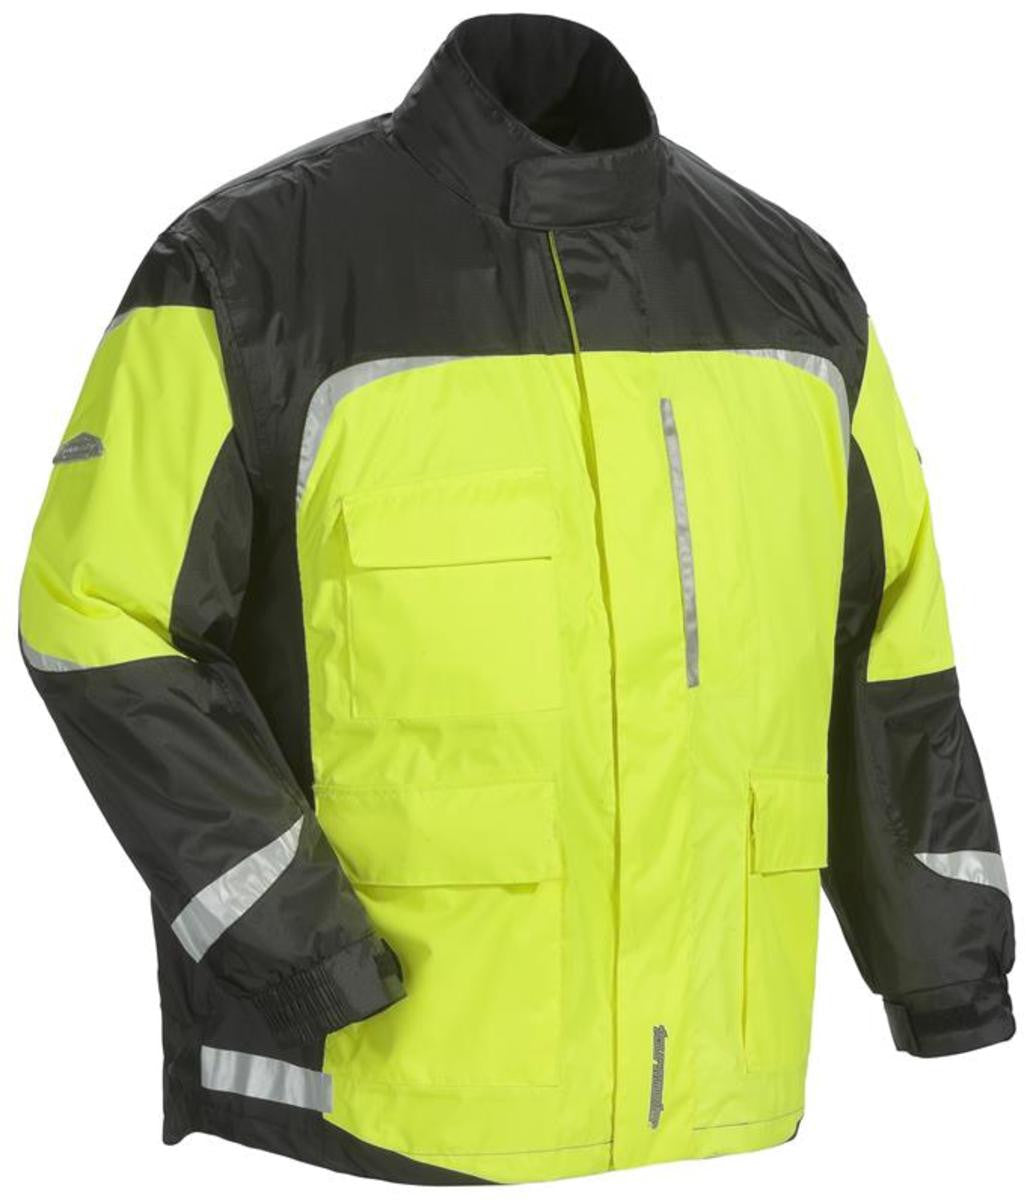 TourMaster Men's Sentinel 2.0 Rainsuit Jacket